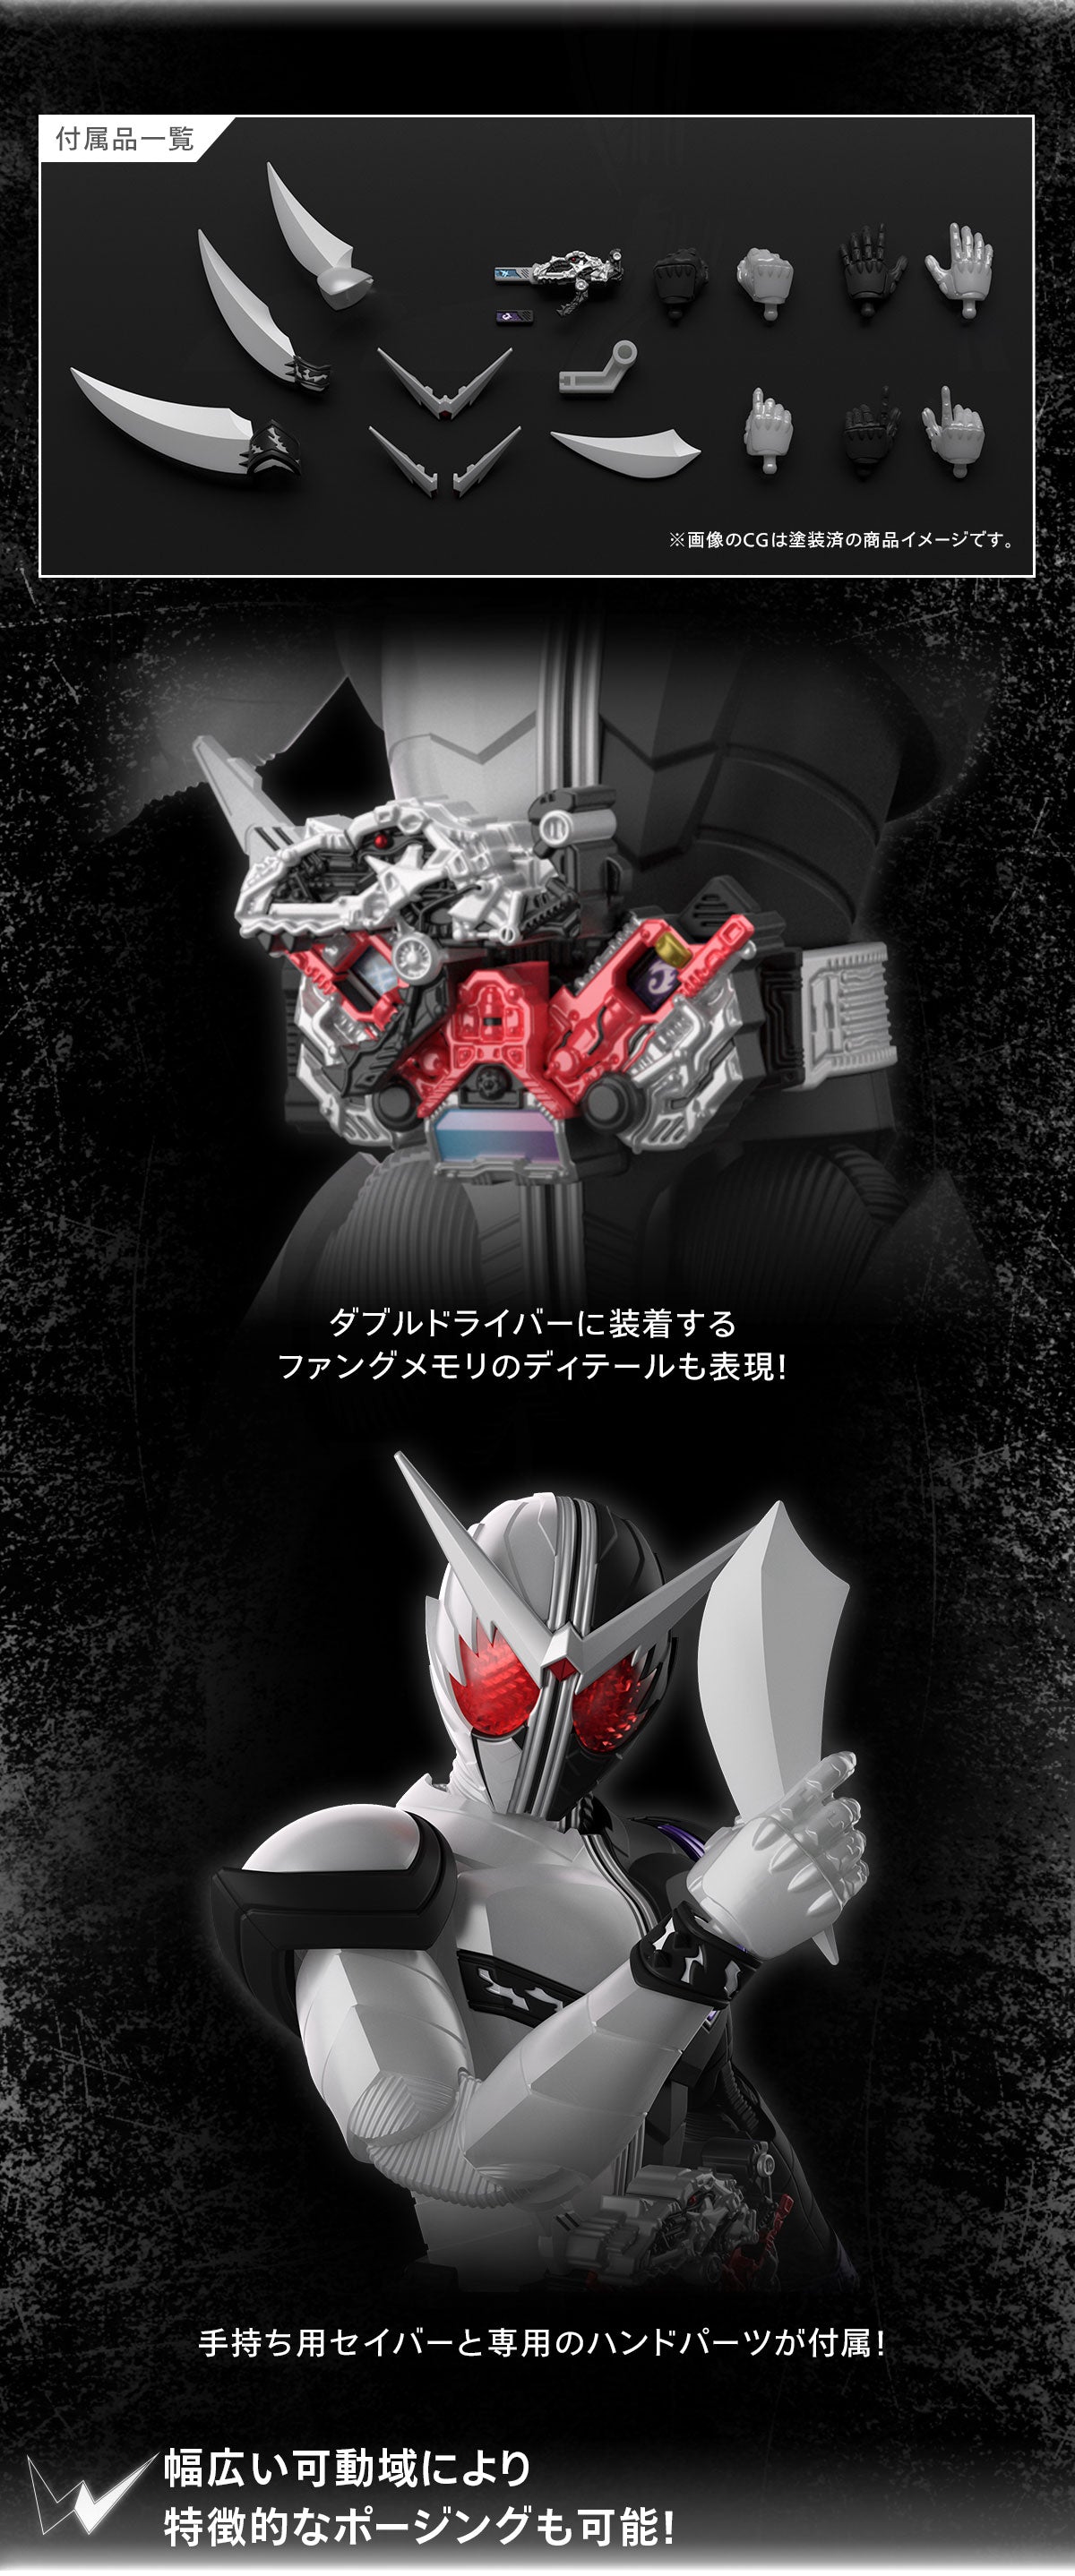 Figure-rise Standard Kamen Rider Double Fang Joker